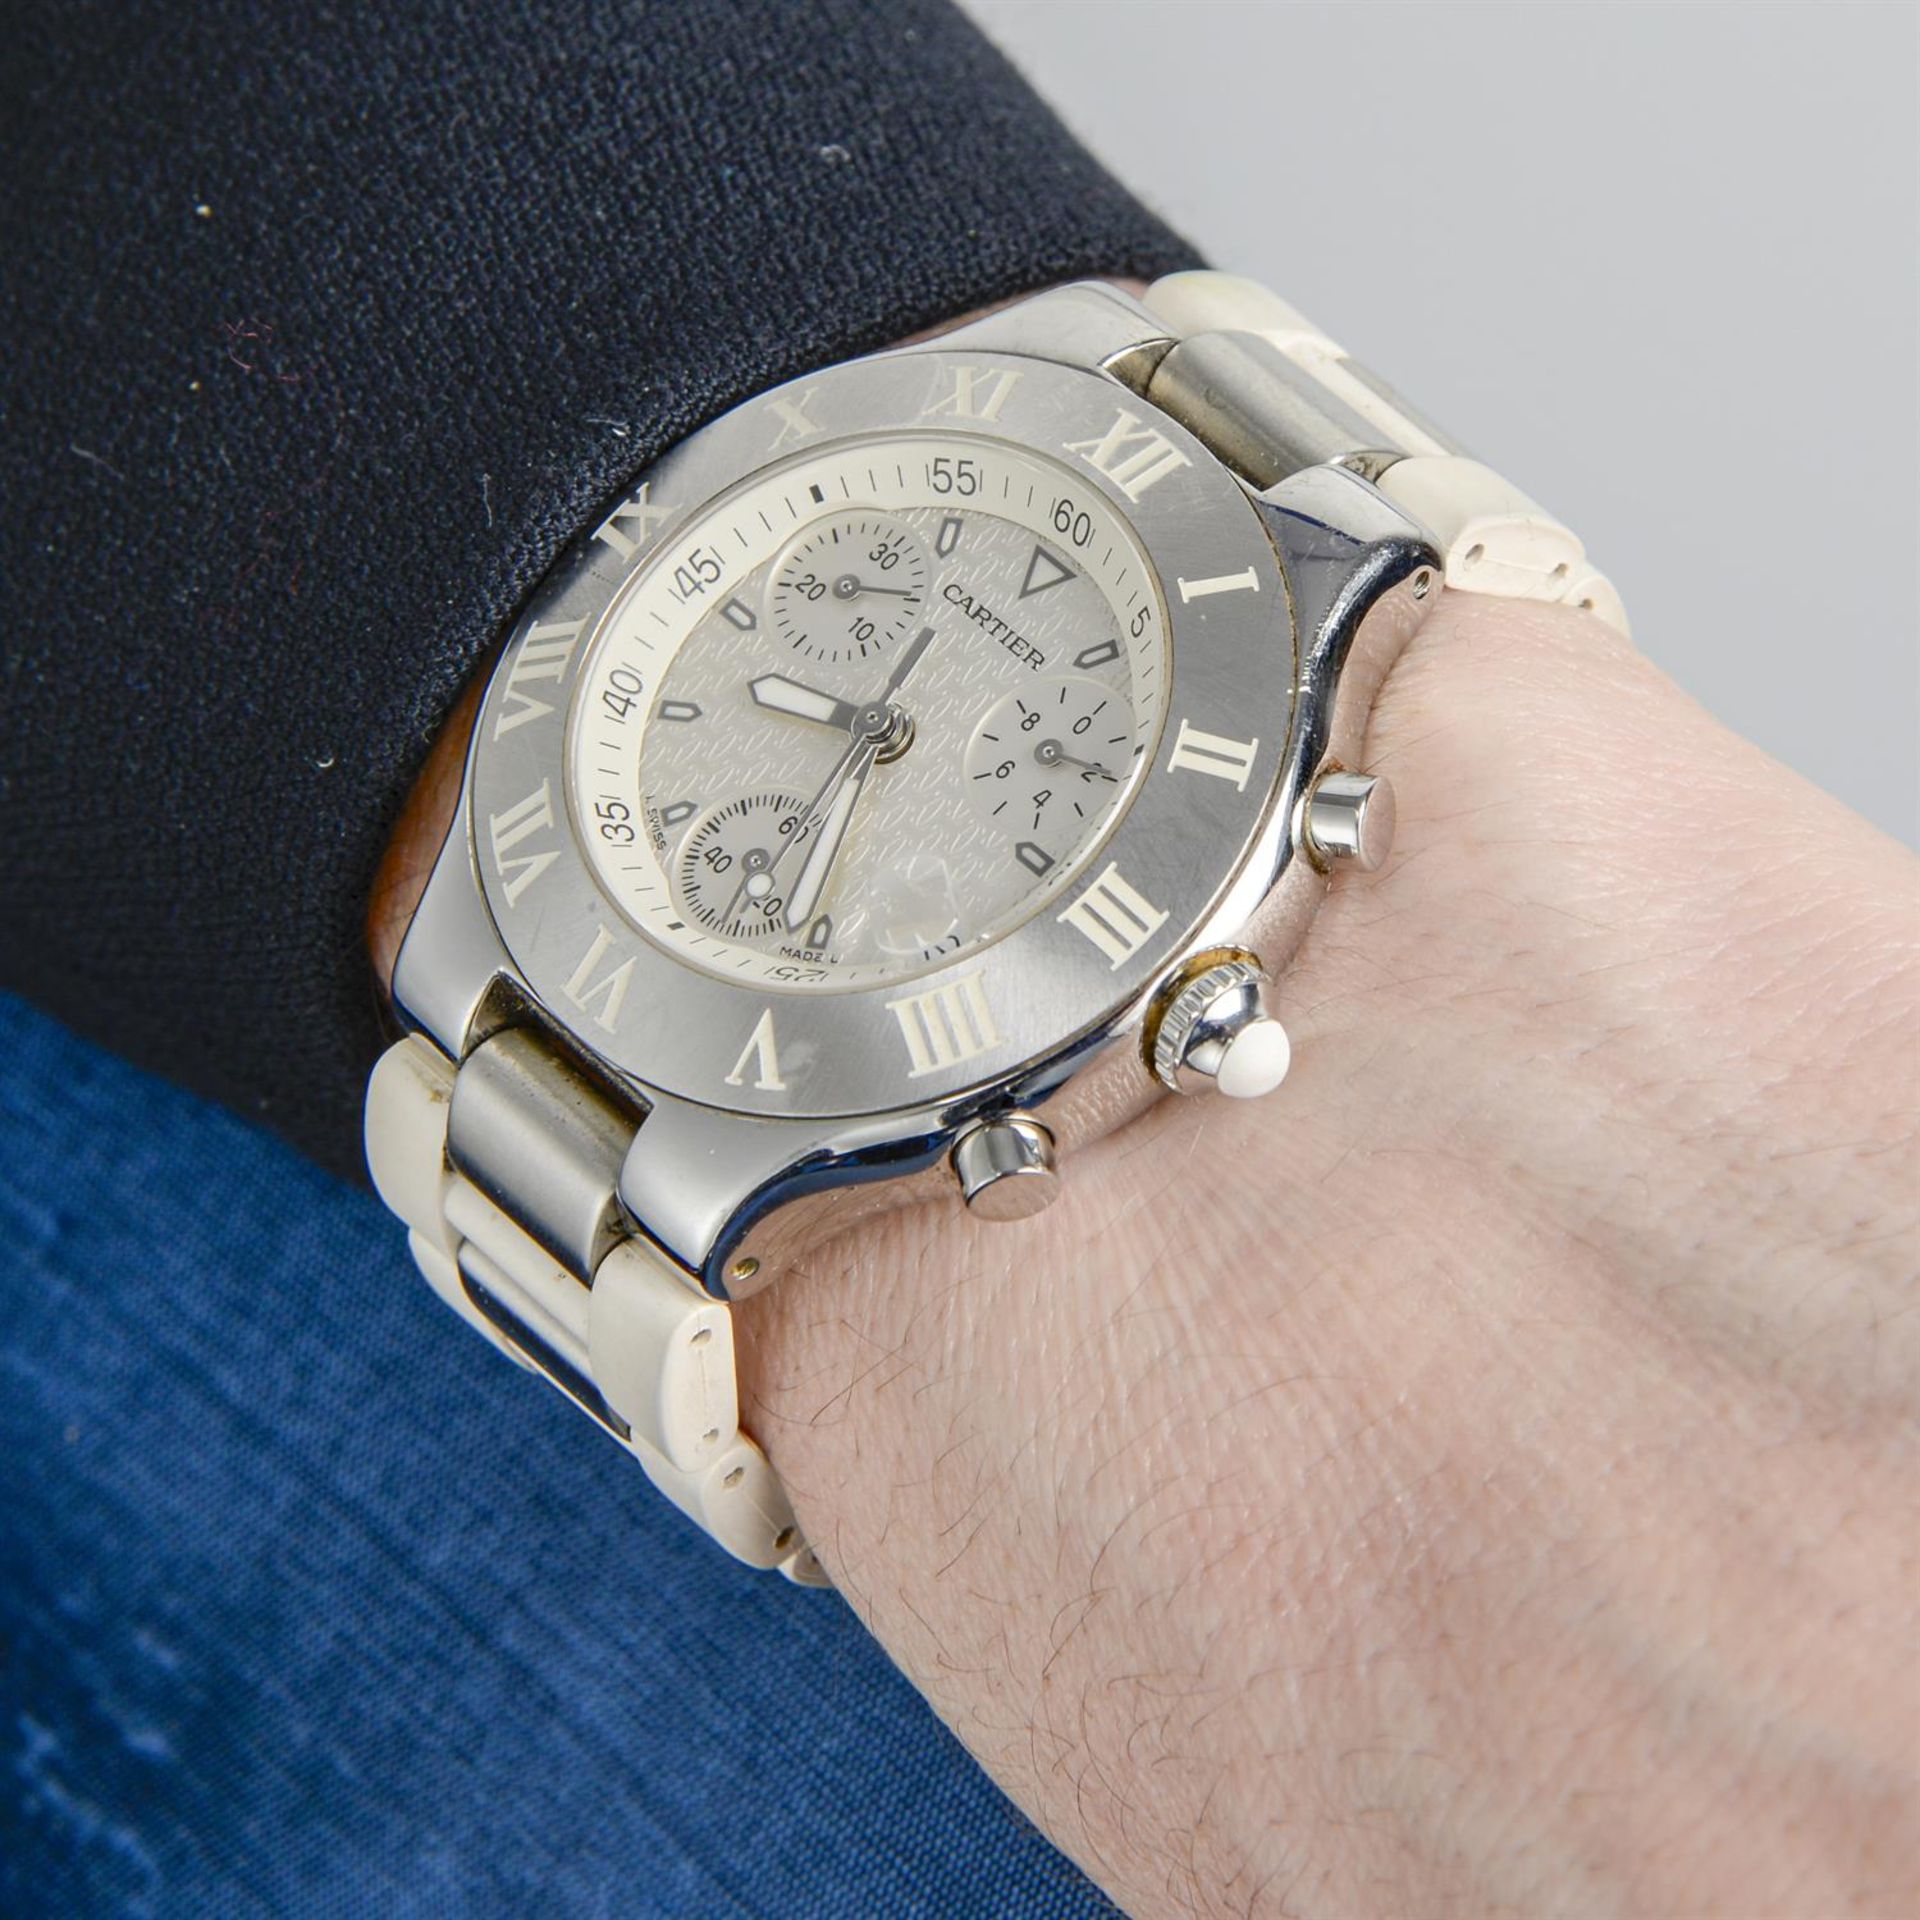 Cartier - a Chronoscaph 21 watch, 38mm. - Image 5 of 5